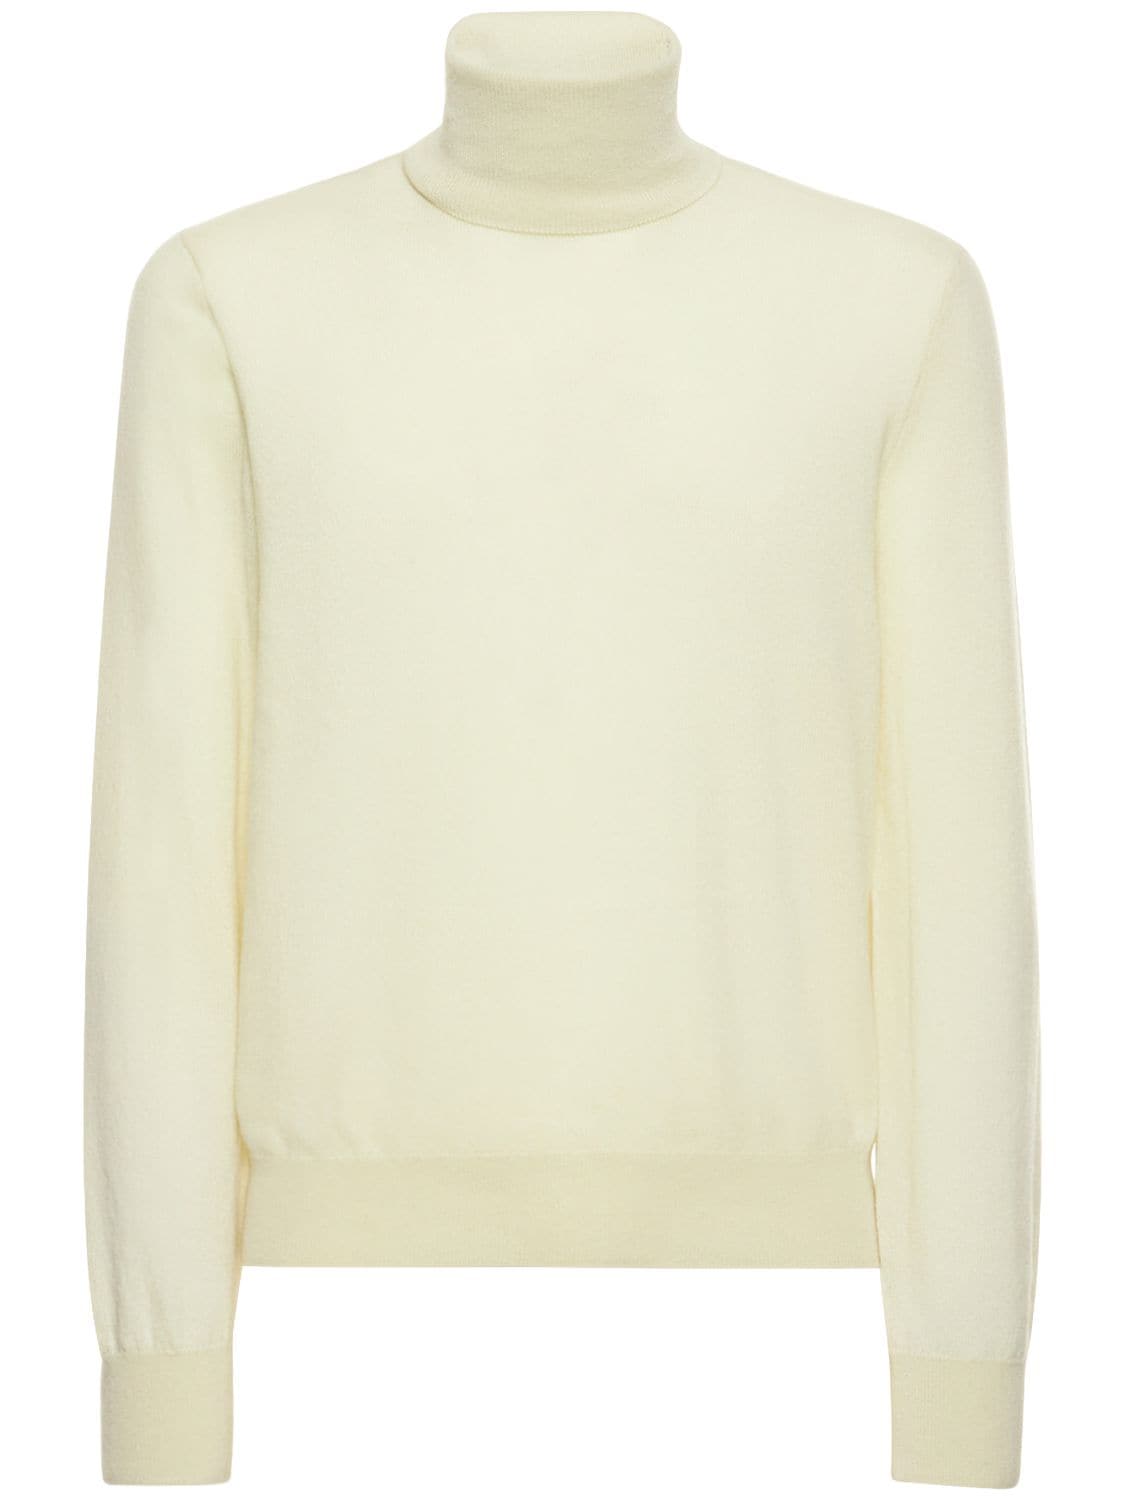 Starnes Cashmere Knit Turtleneck Sweater